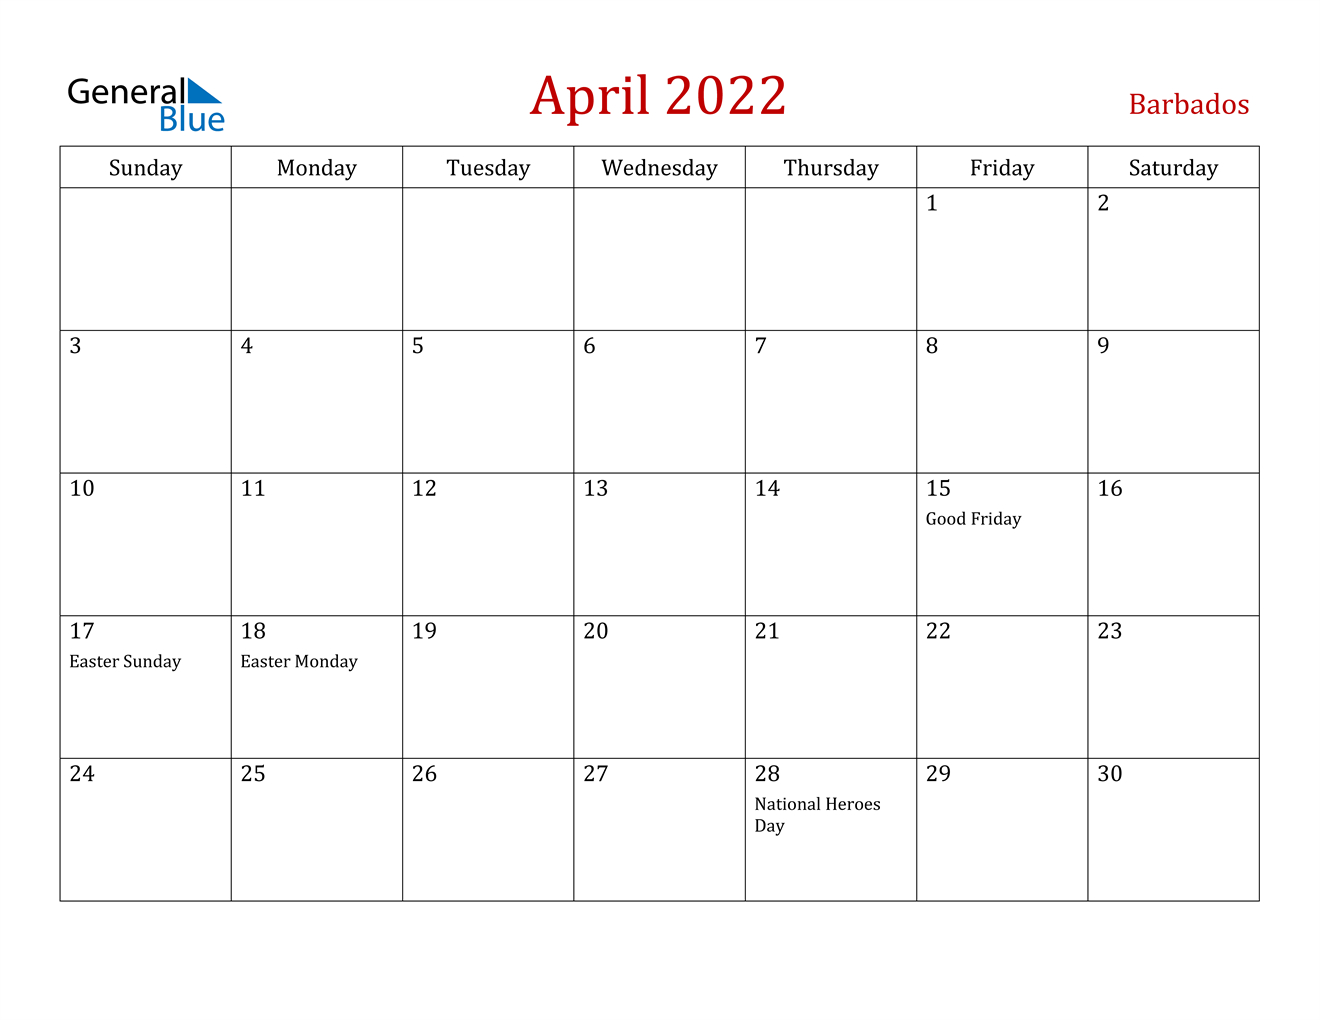 April 2022 Calendar - Barbados